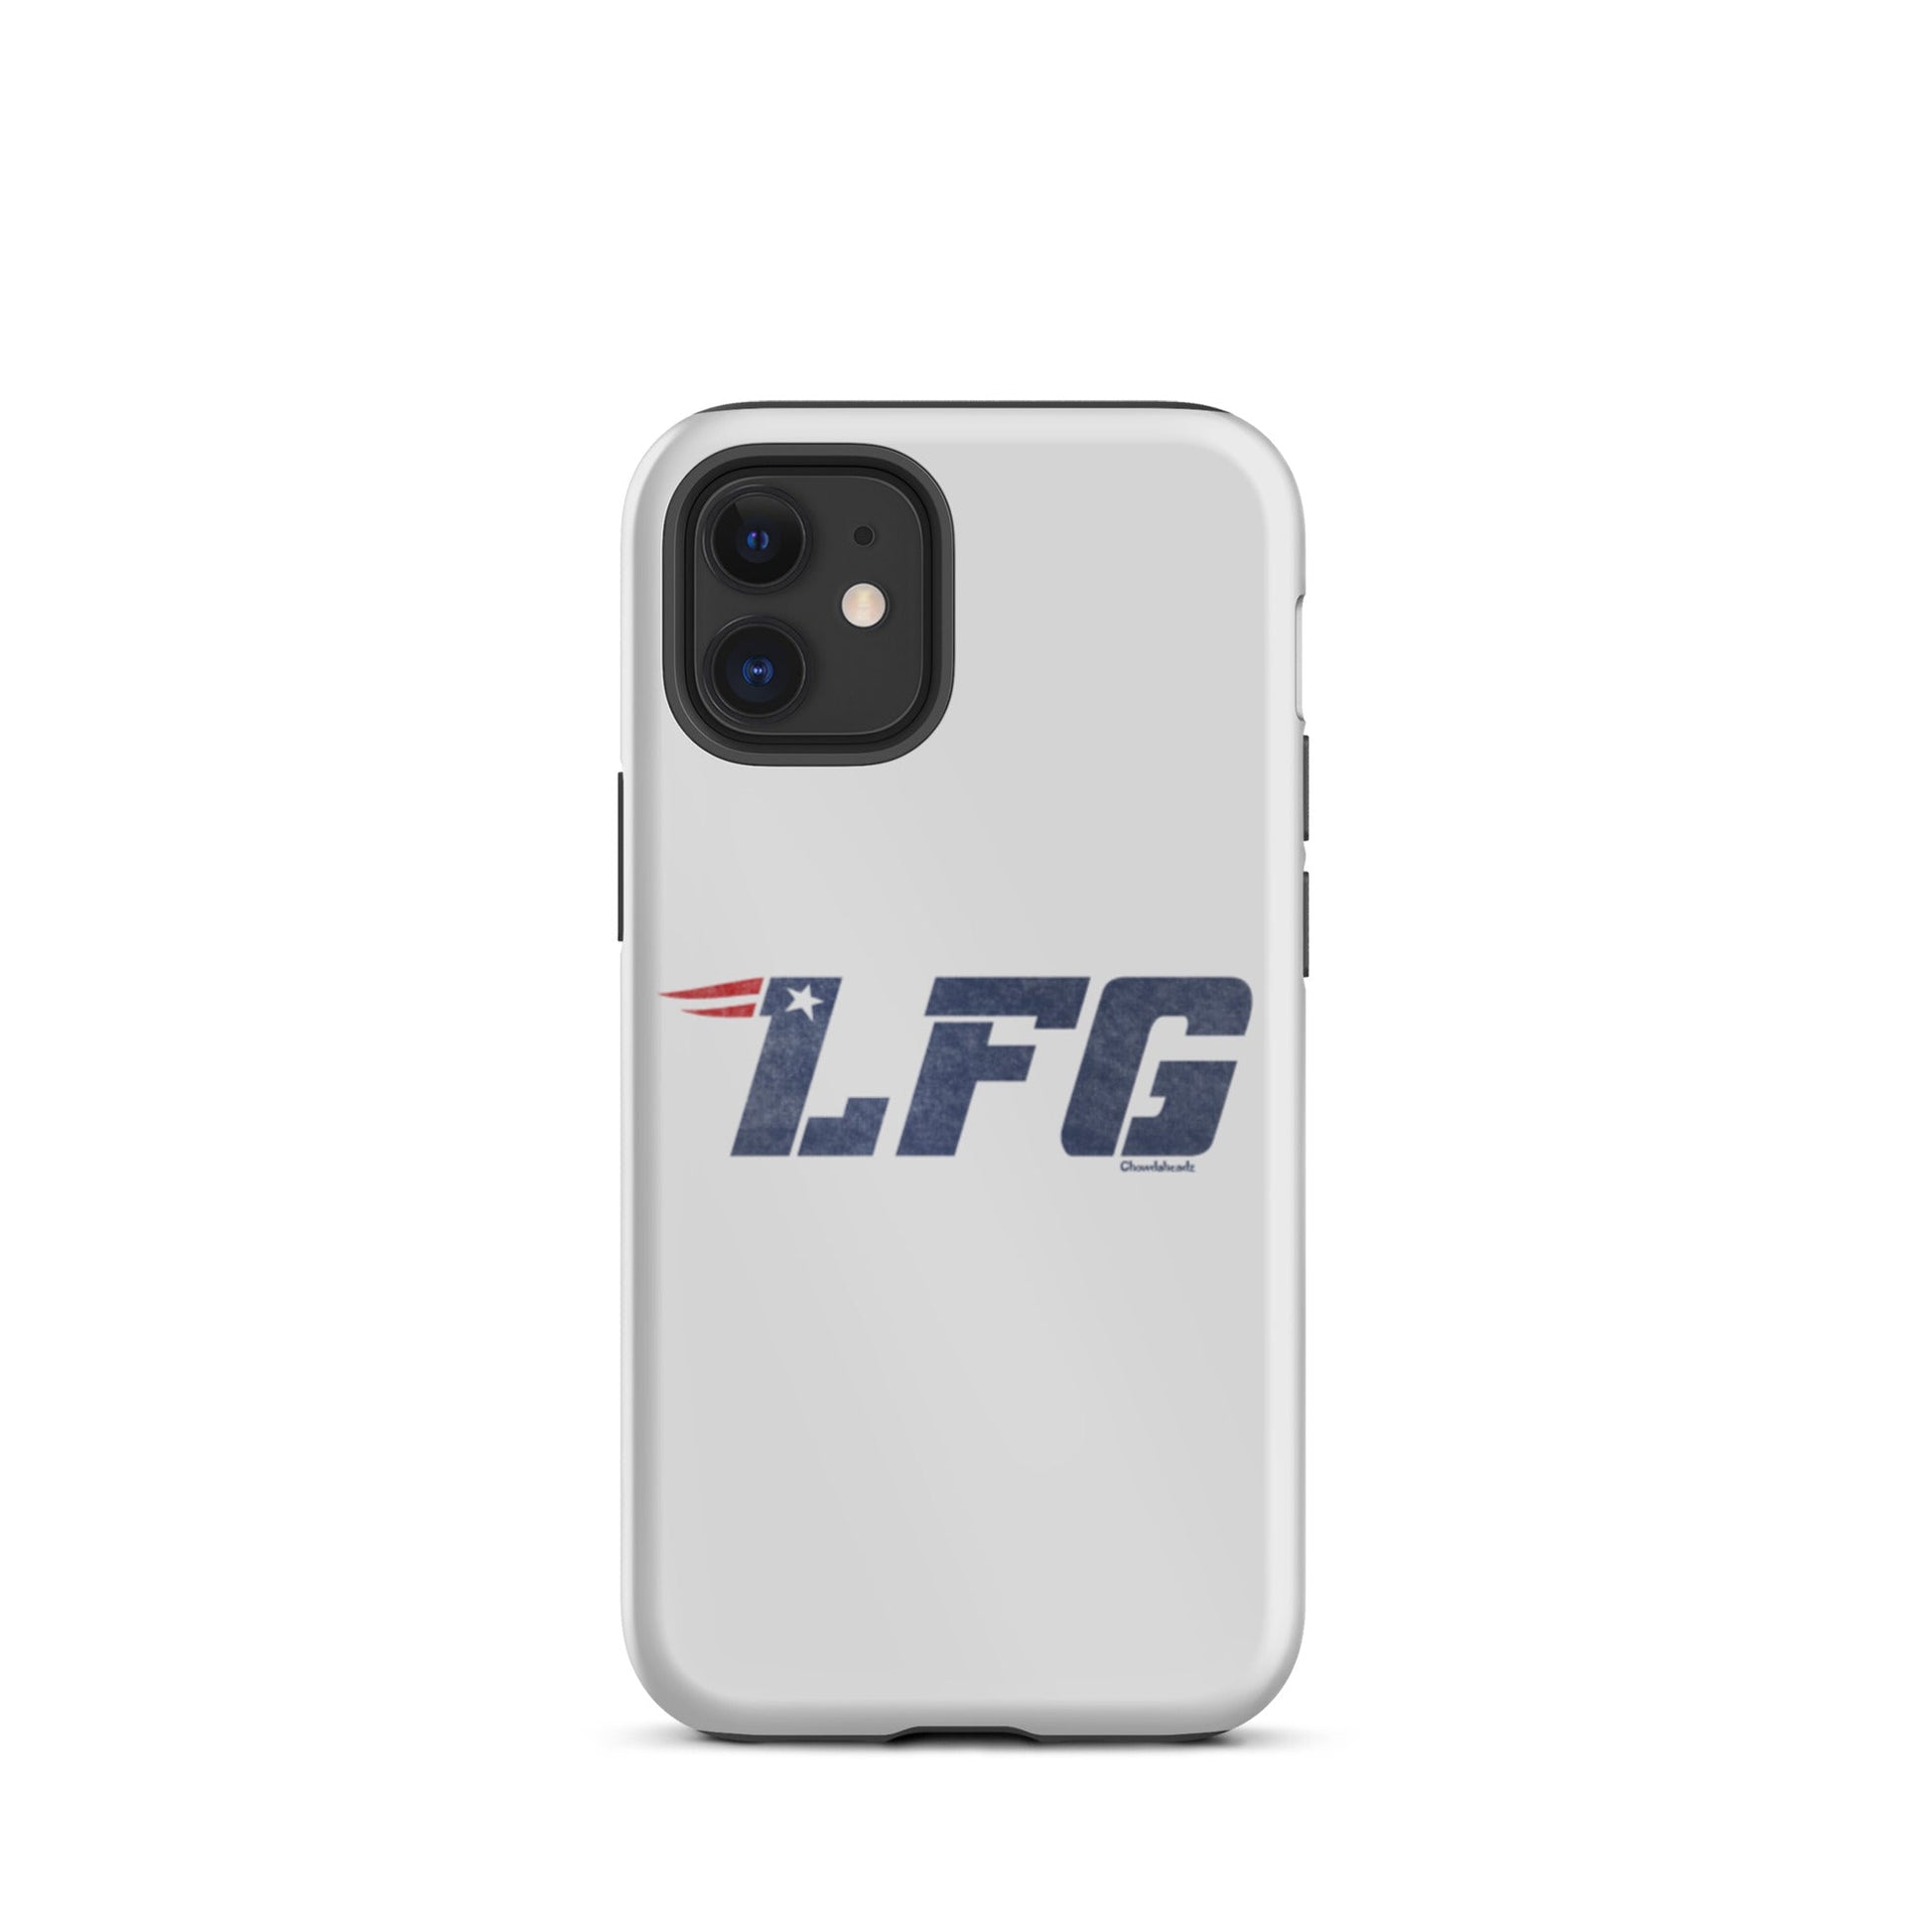 LFG New England Tough iPhone case - Chowdaheadz